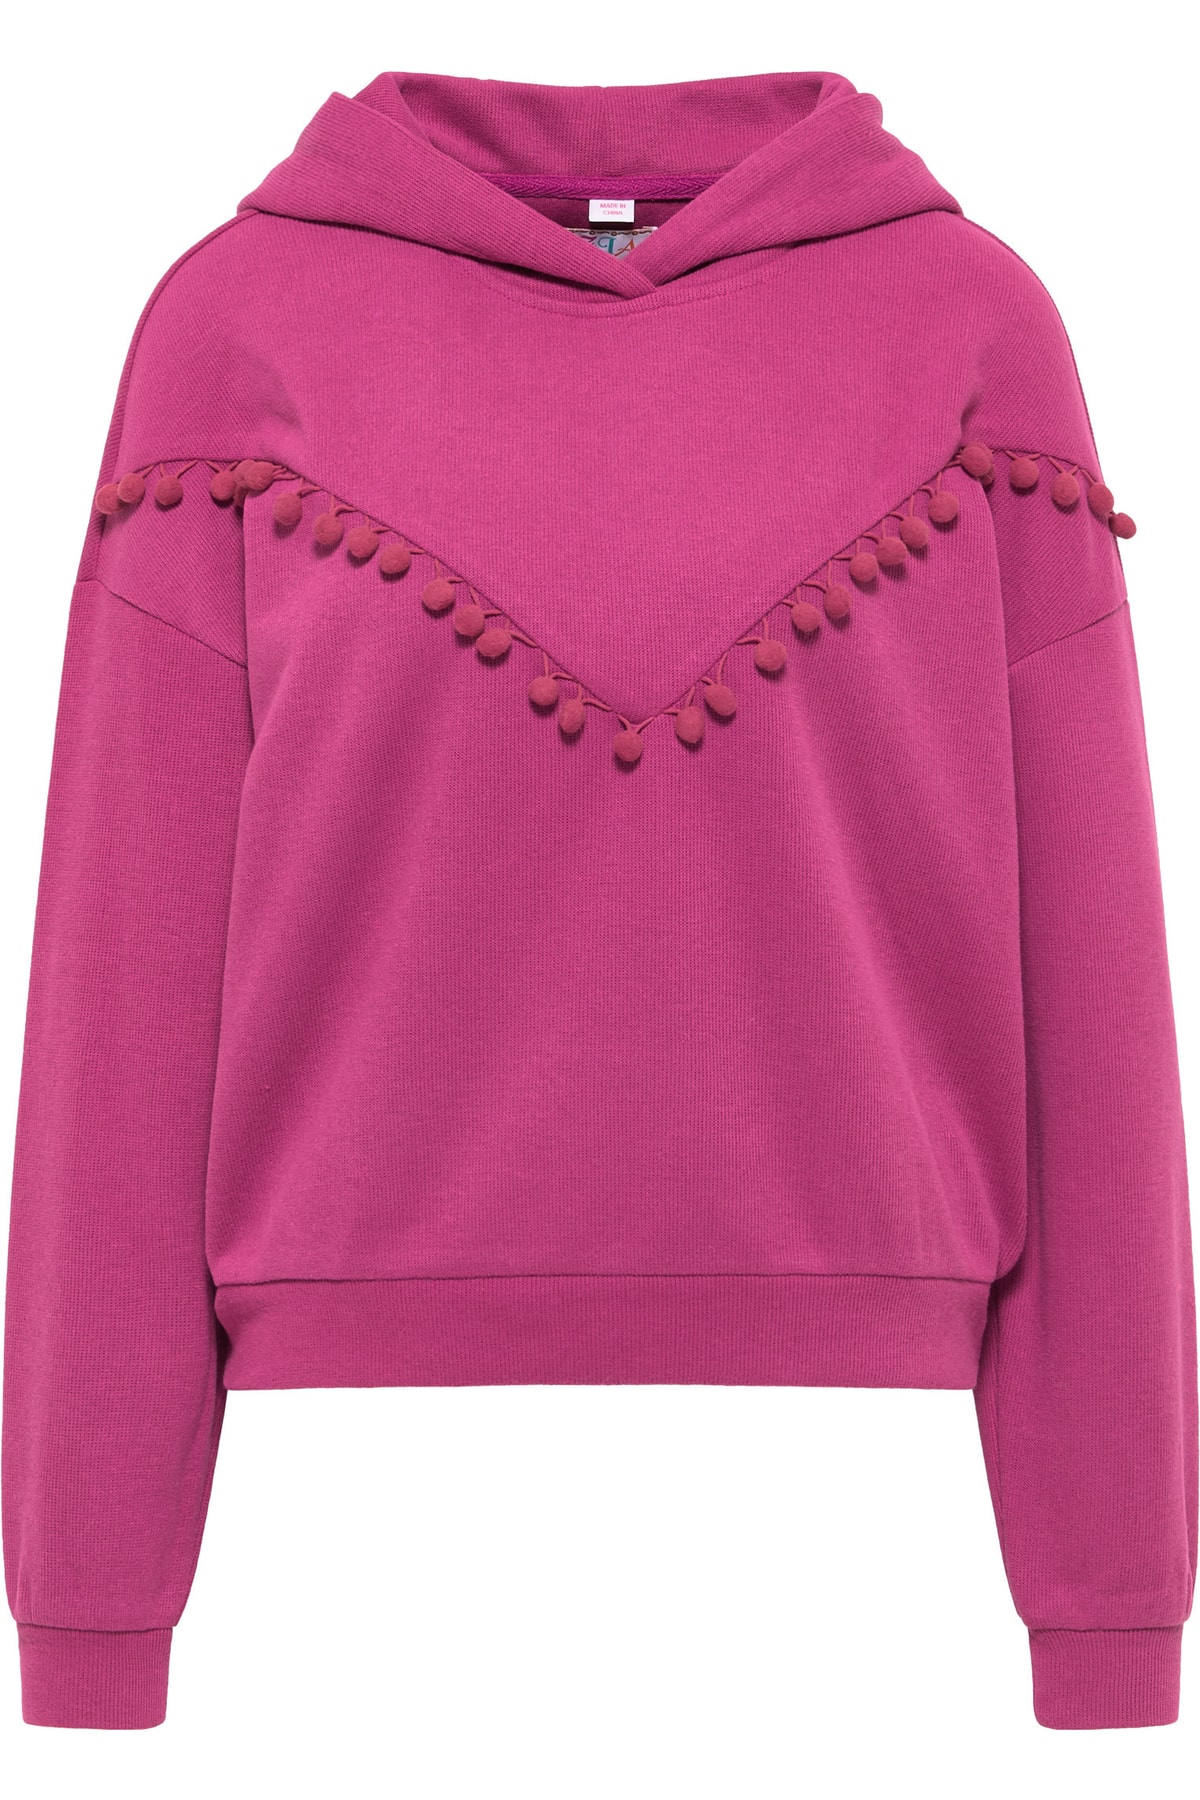 Izia Sweatshirt Rosa Regular Fit Fast ausverkauft